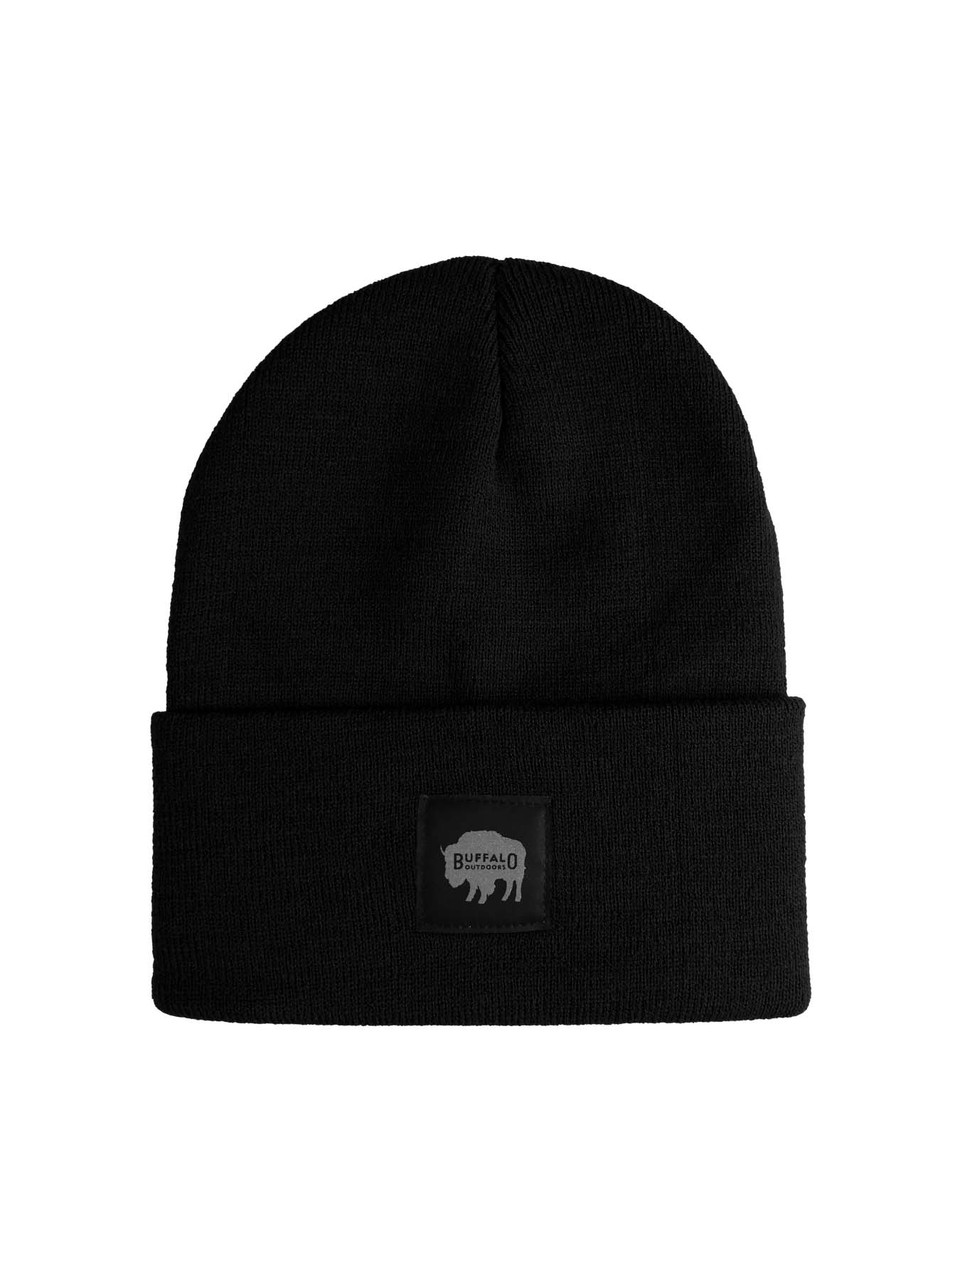 Buffalo Outdoors | Buffalo Winter Knit Reflective Work Hat